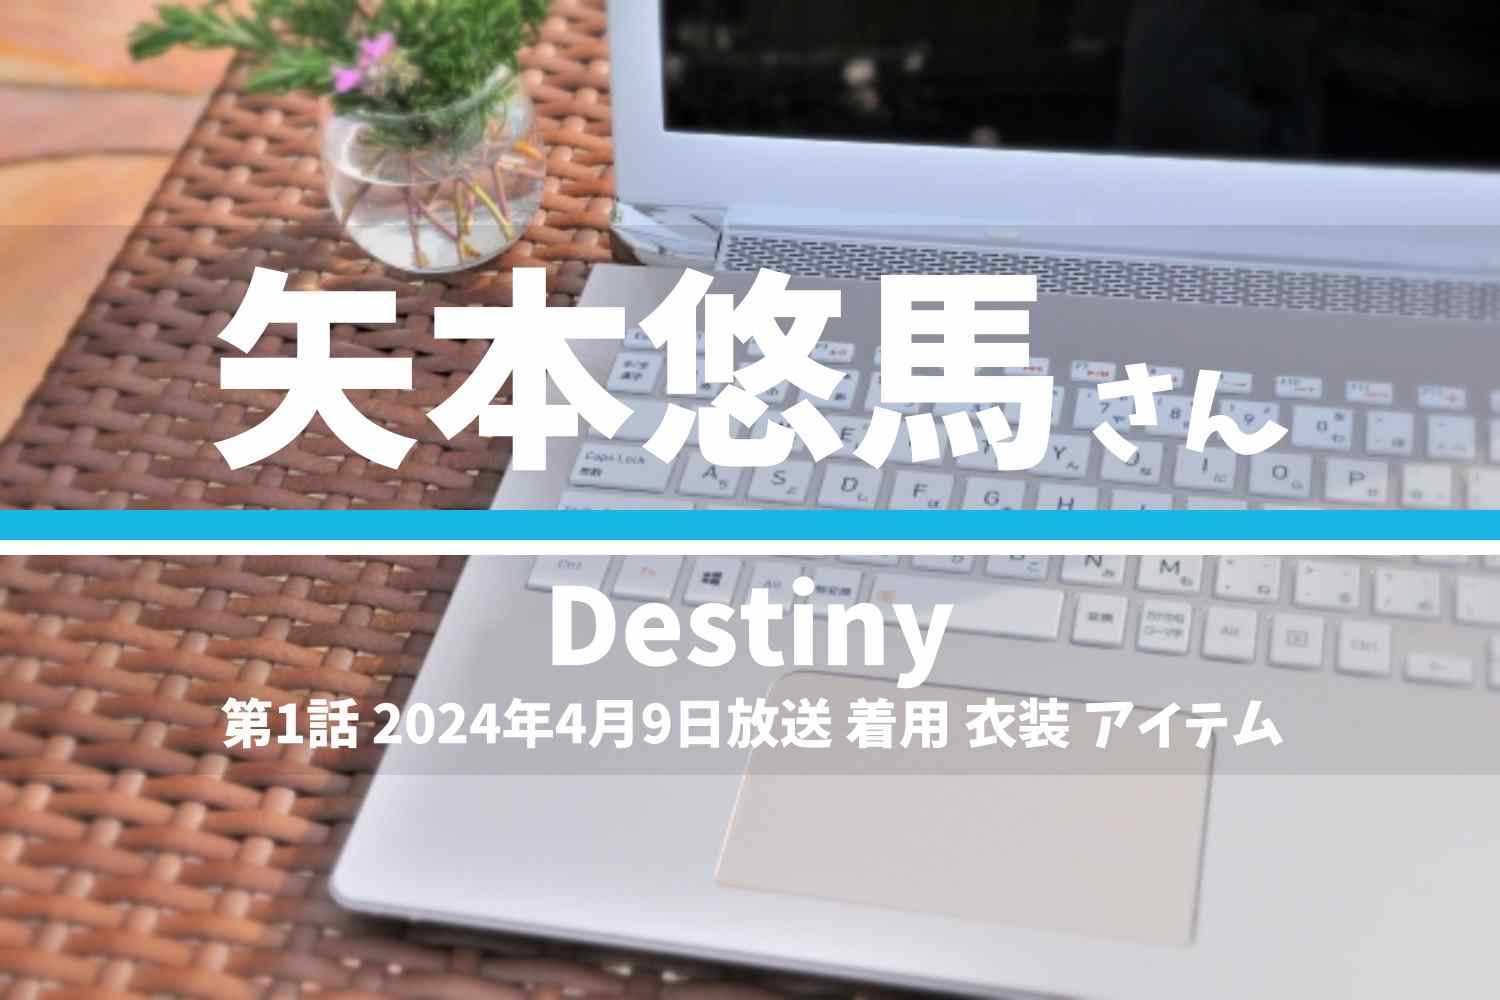 Destiny 矢本悠馬さん テレビドラマ 衣装 2024年4月9日放送